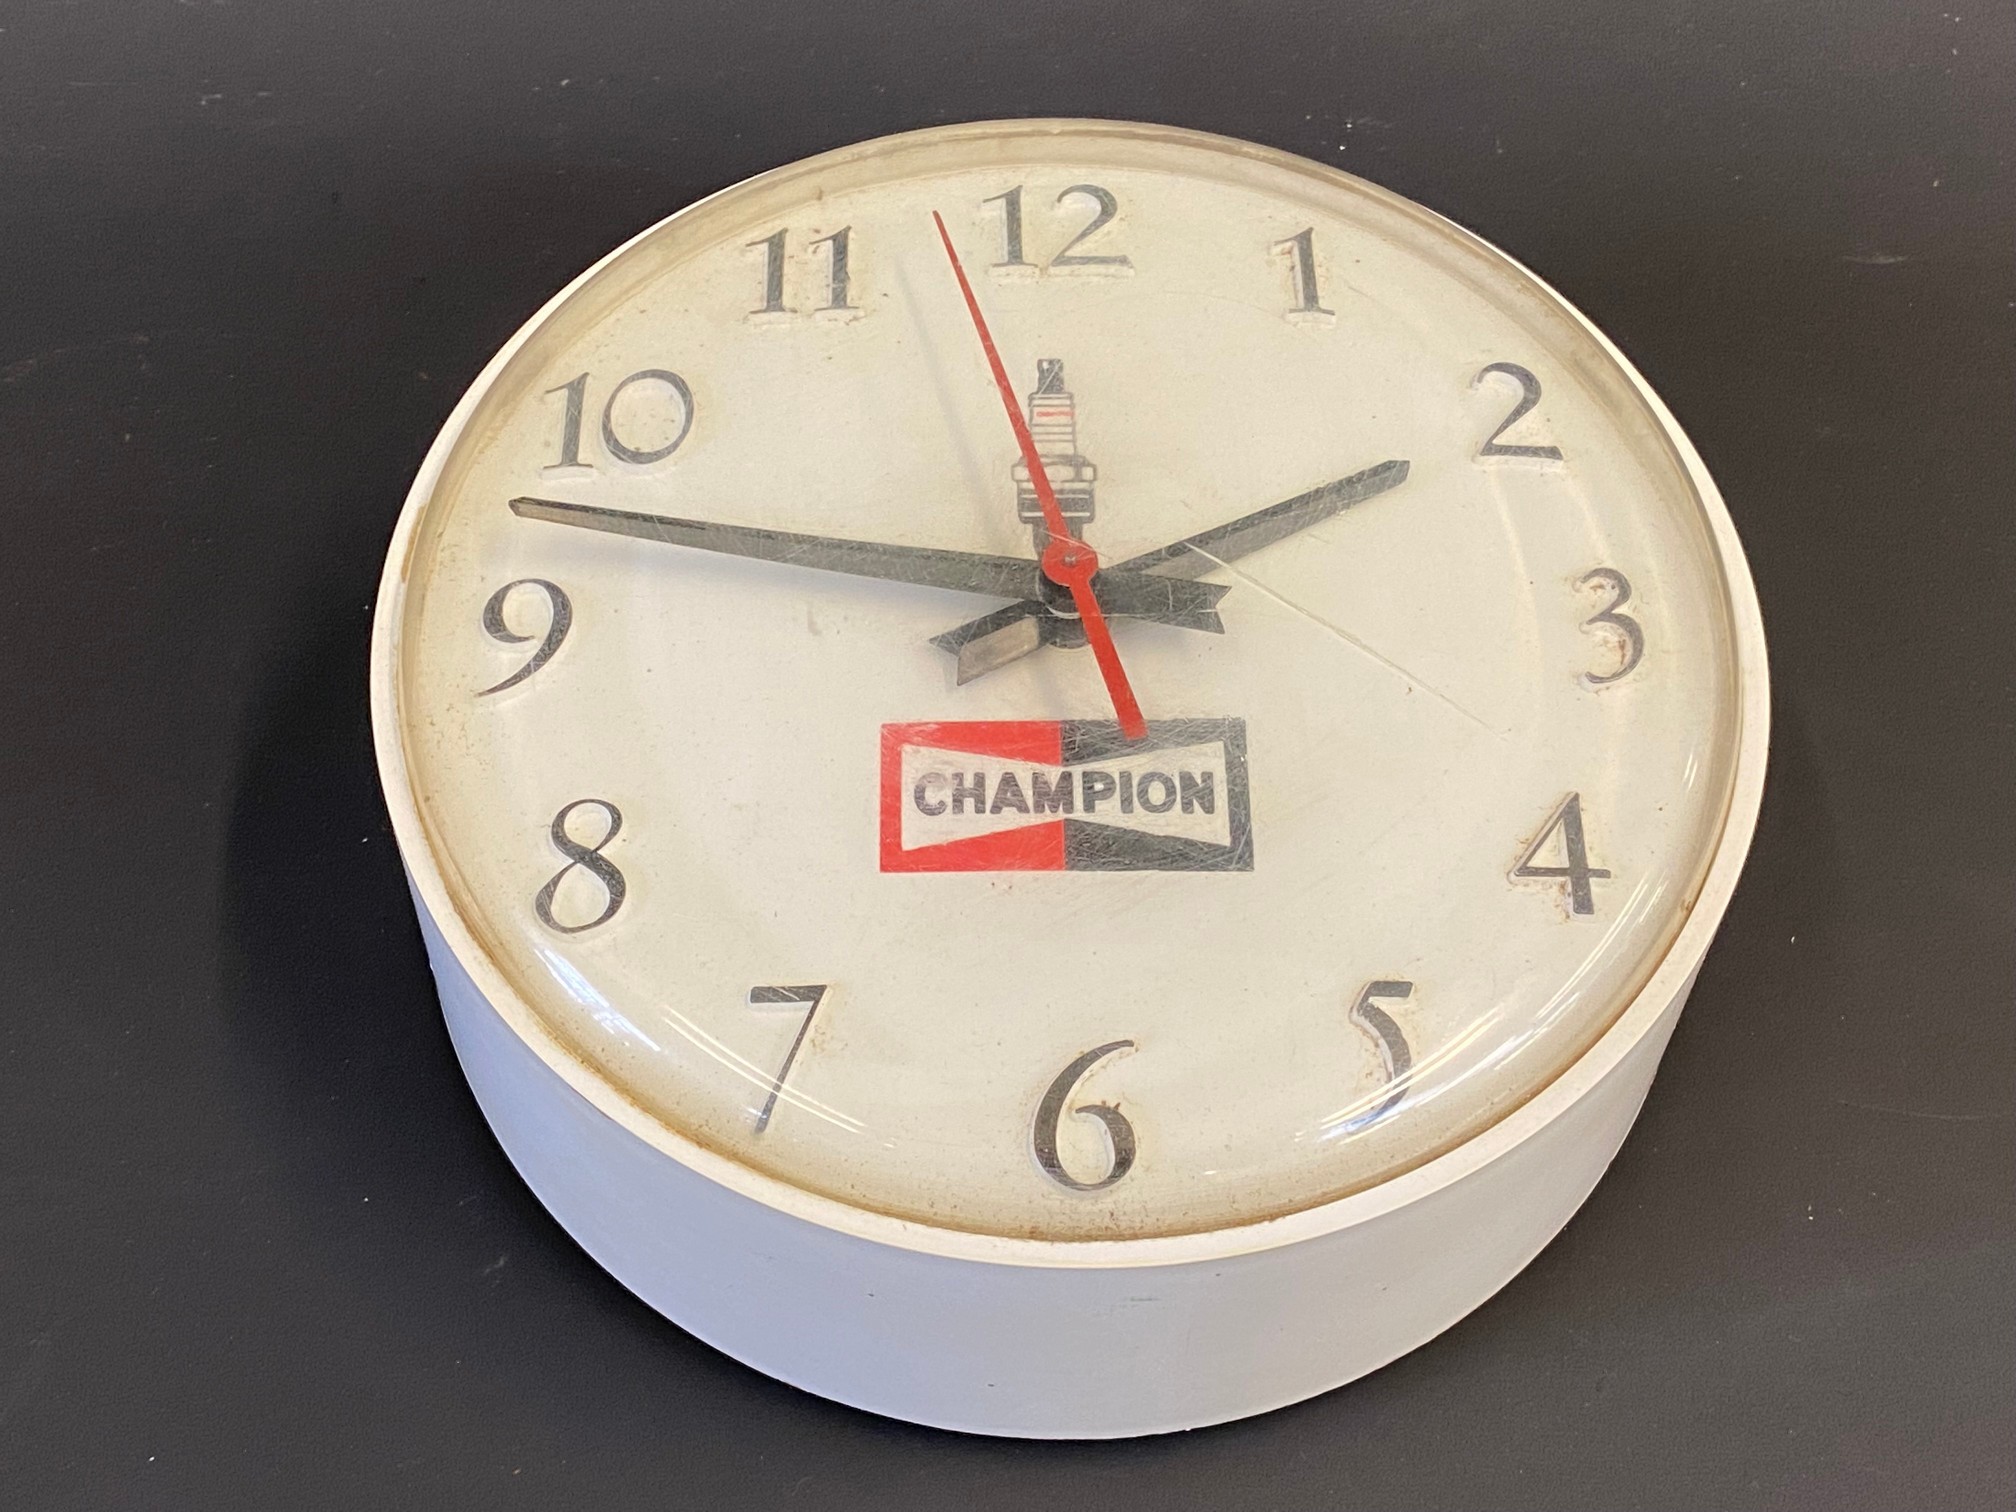 A Champion spark plugs circular dealership wall clock, 6 1/2" diameter.